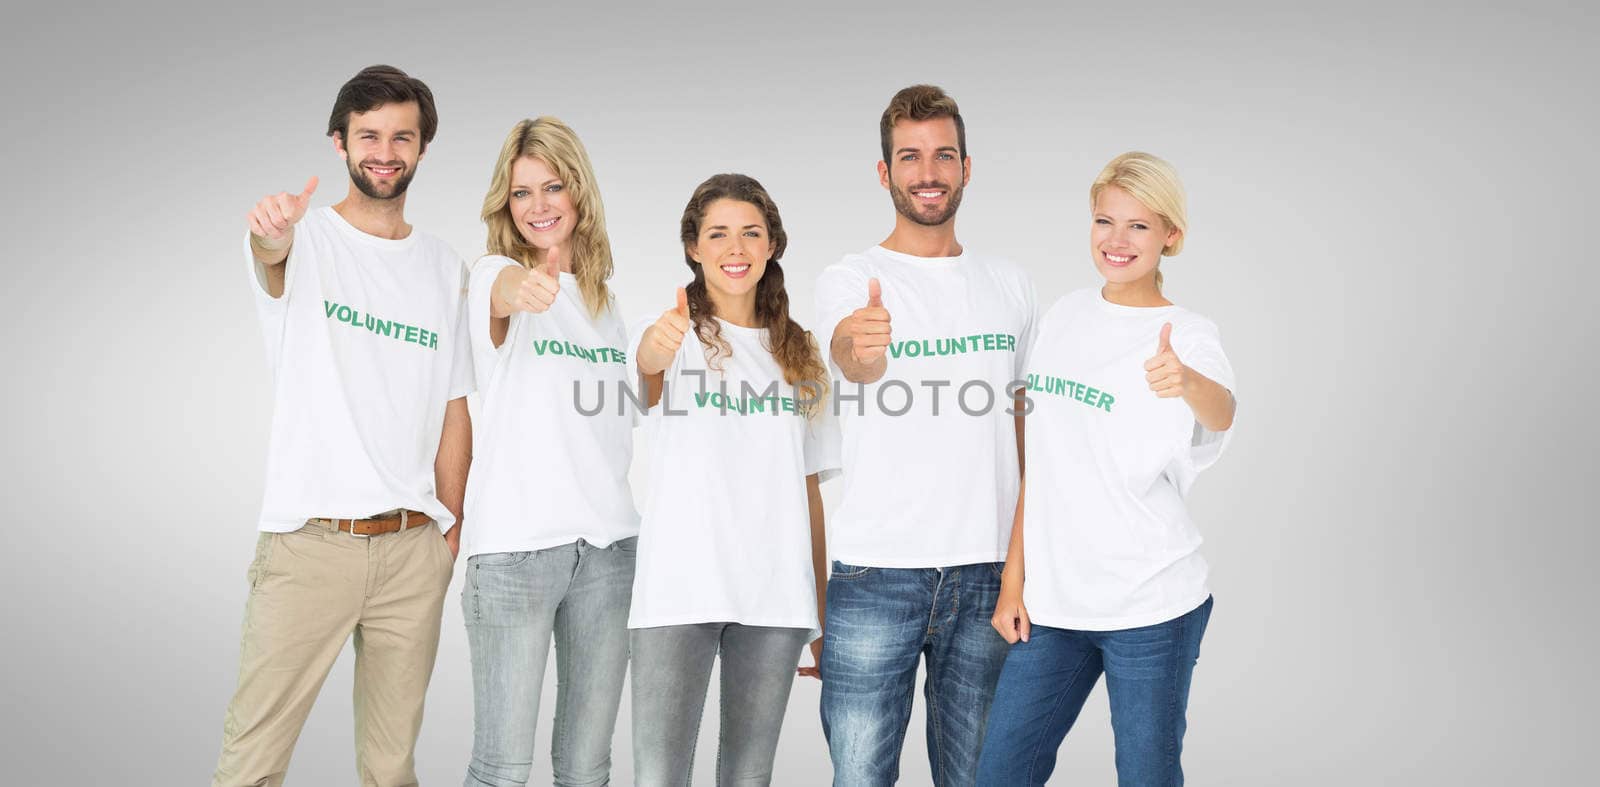 Composite image of group portrait of happy volunteers gesturing thumbs up by Wavebreakmedia